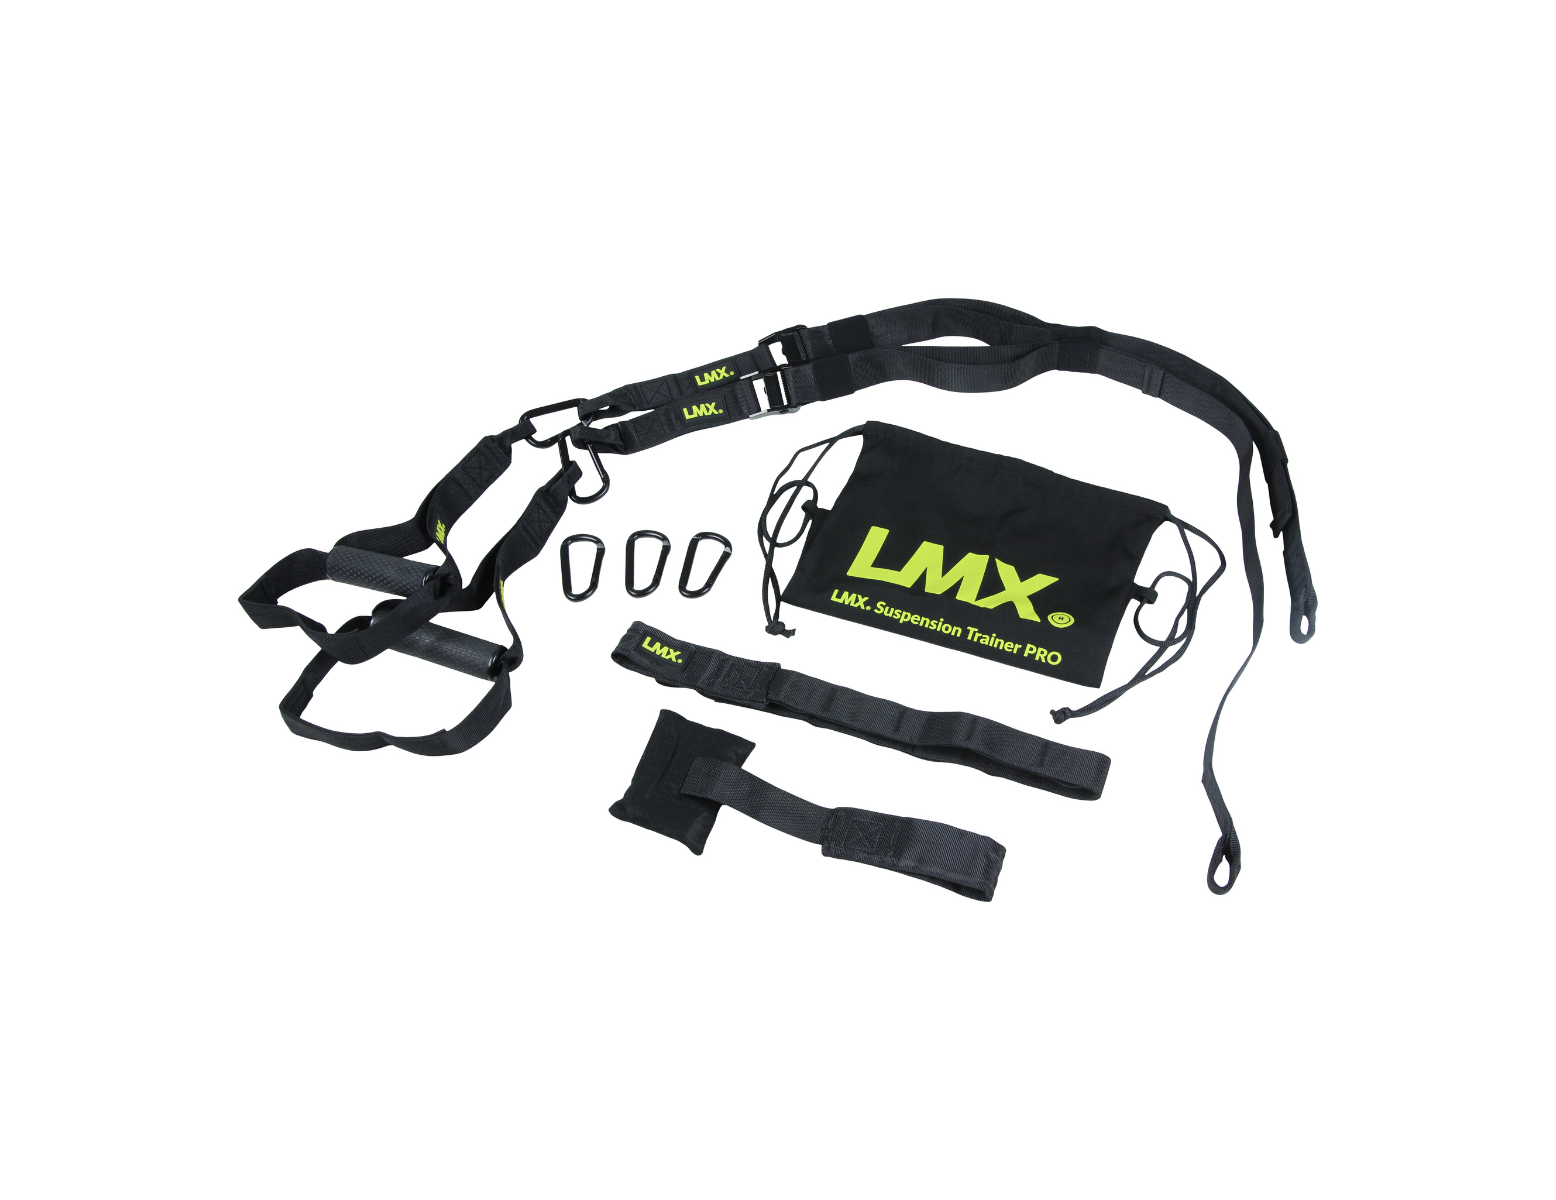 LMX Suspension Trainer PRO